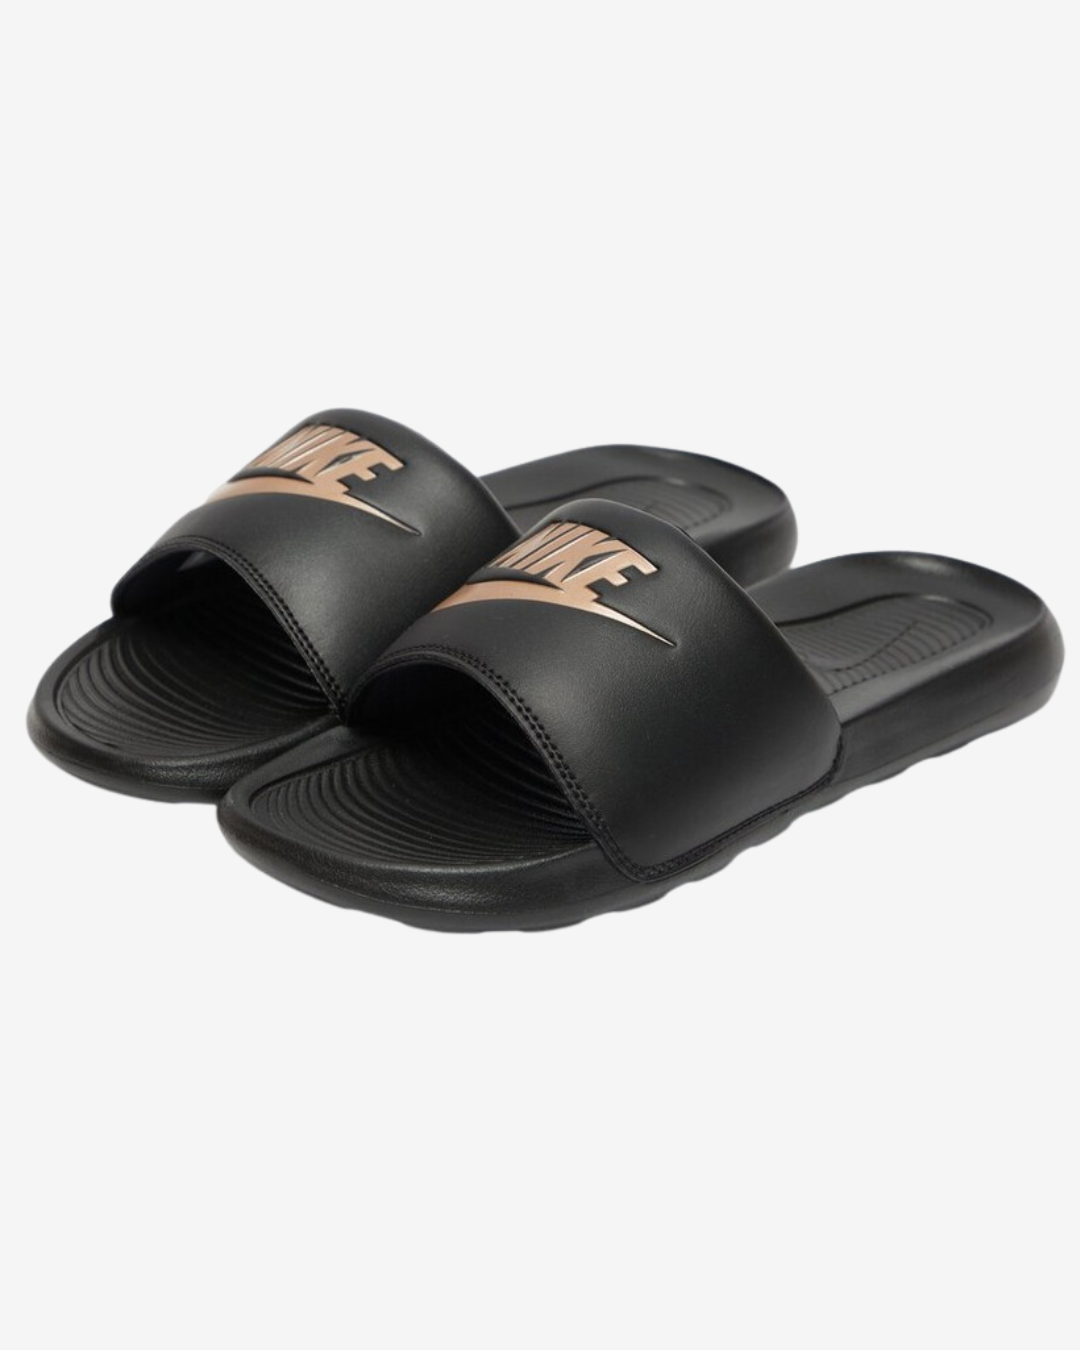 Nike Victori slippers - Sort / Bronze - Str. 42 - Modish.dk